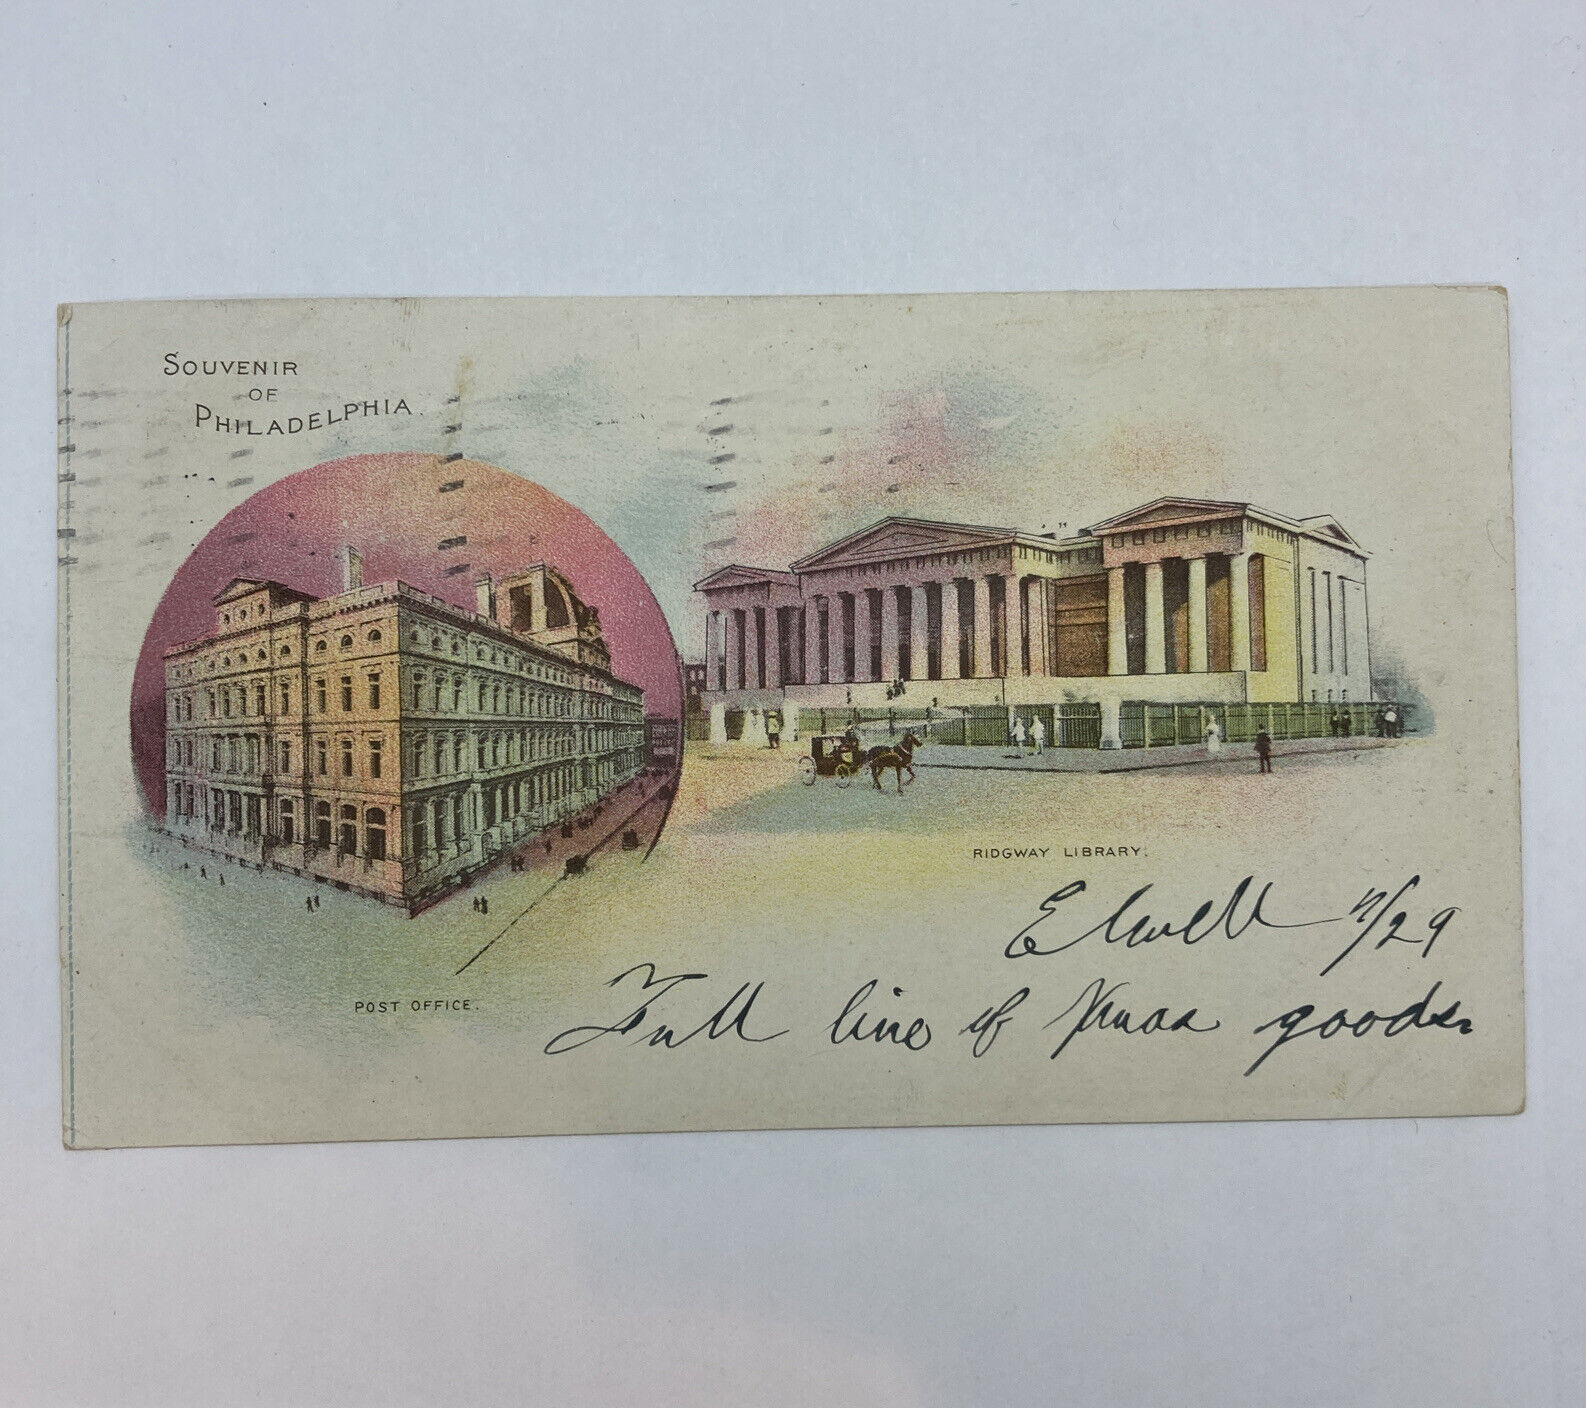 1905 PA Postcard Mailing Card Souvenir of Philadelphia multi-view / Rare Colored